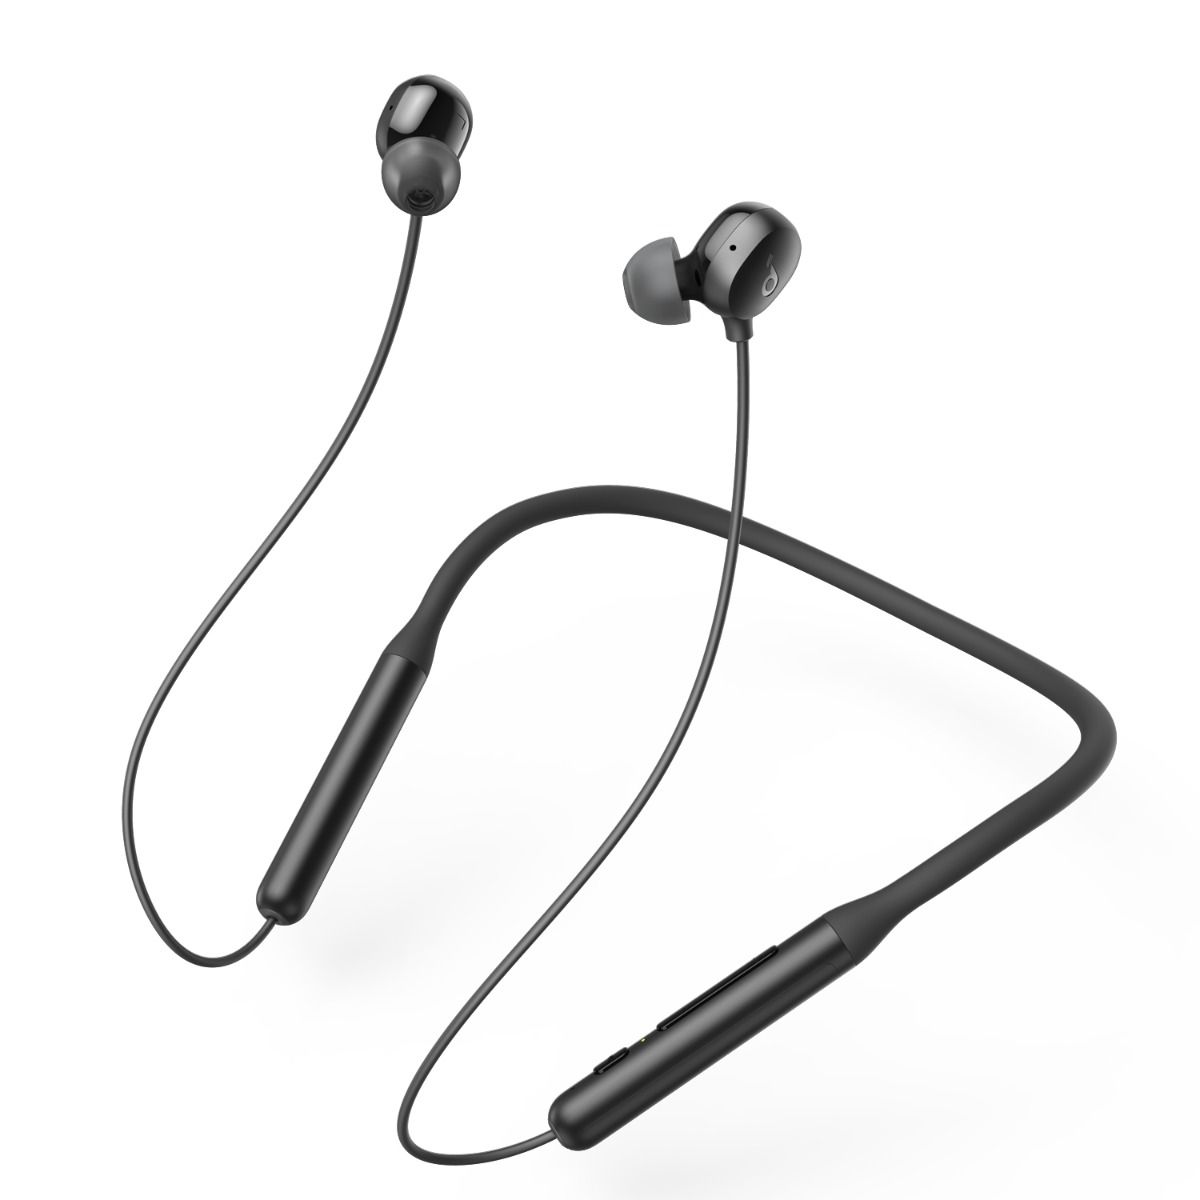 Anker SoundCore Life U2I Neckband In-Ear Earphones With Microphone, Black - A3213H11